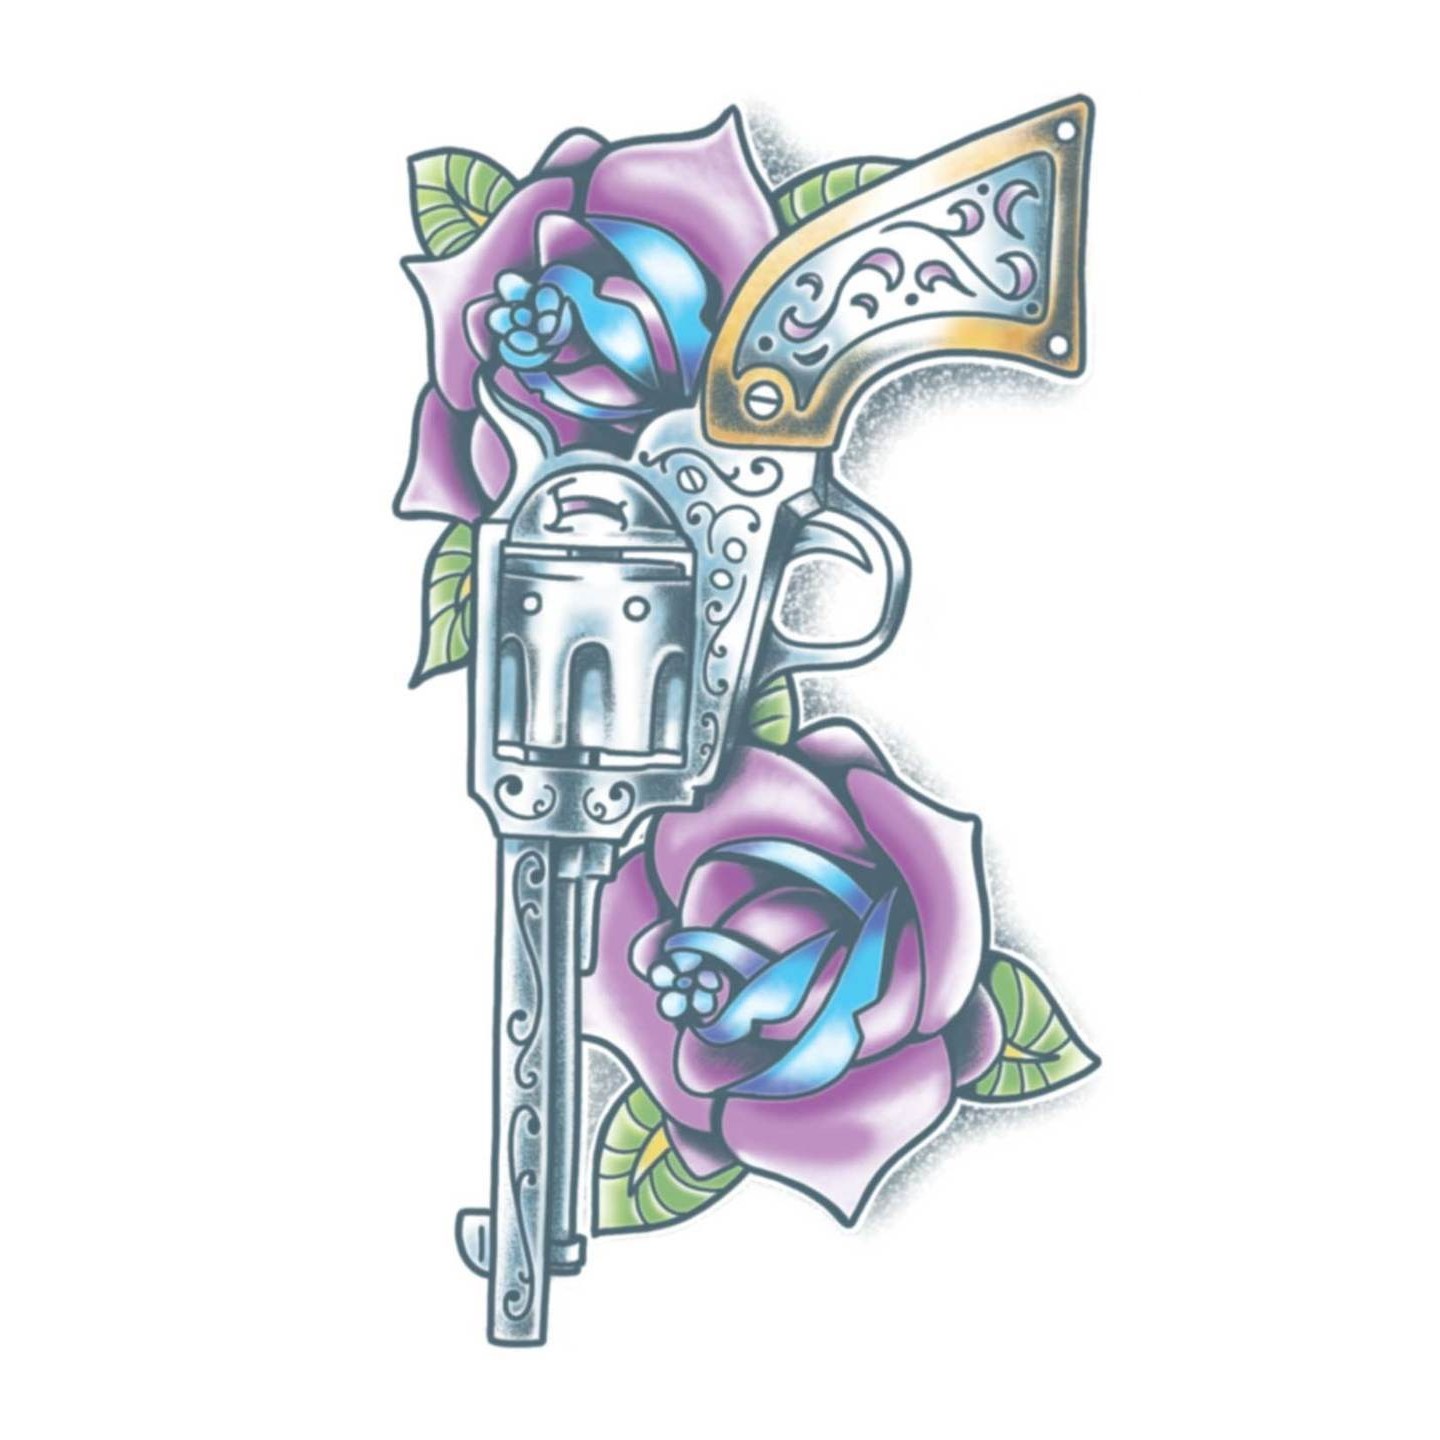 tijdelijke nep tattoo plaktattoo pistool rozen